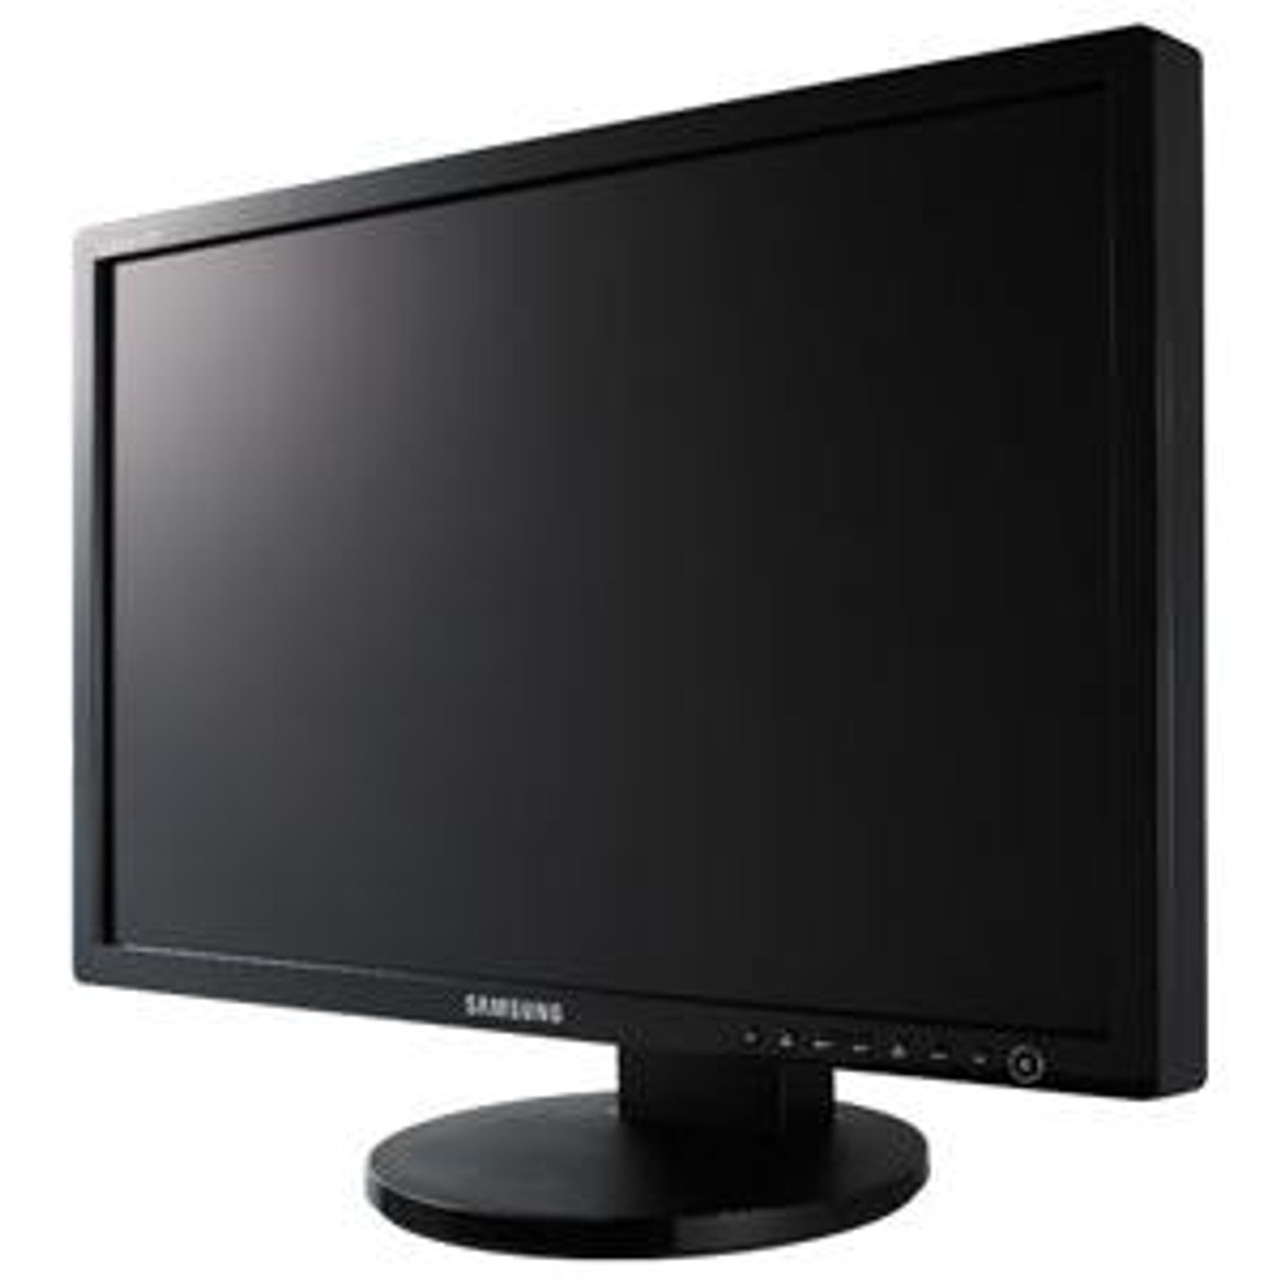 216BW - Samsung SyncMaster 216BW 21.6 LCD Monitor 1680 x 1050 16.7 Million Colors 3000:1 DVI VGA Black (Refurbished)